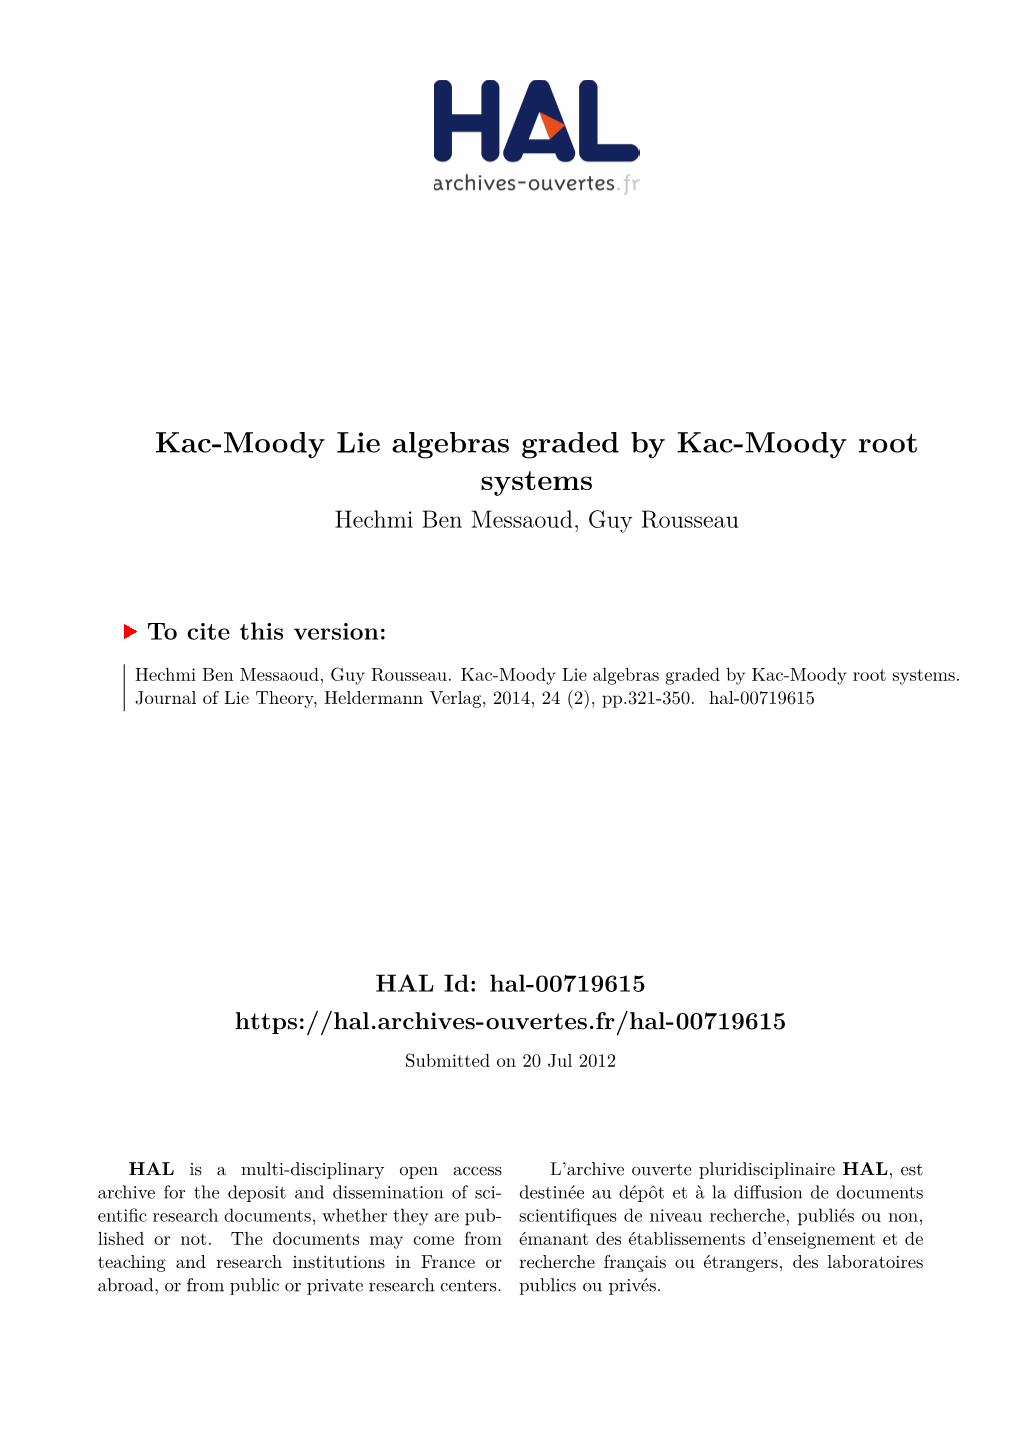 Kac-Moody Lie Algebras Graded by Kac-Moody Root Systems Hechmi Ben Messaoud, Guy Rousseau